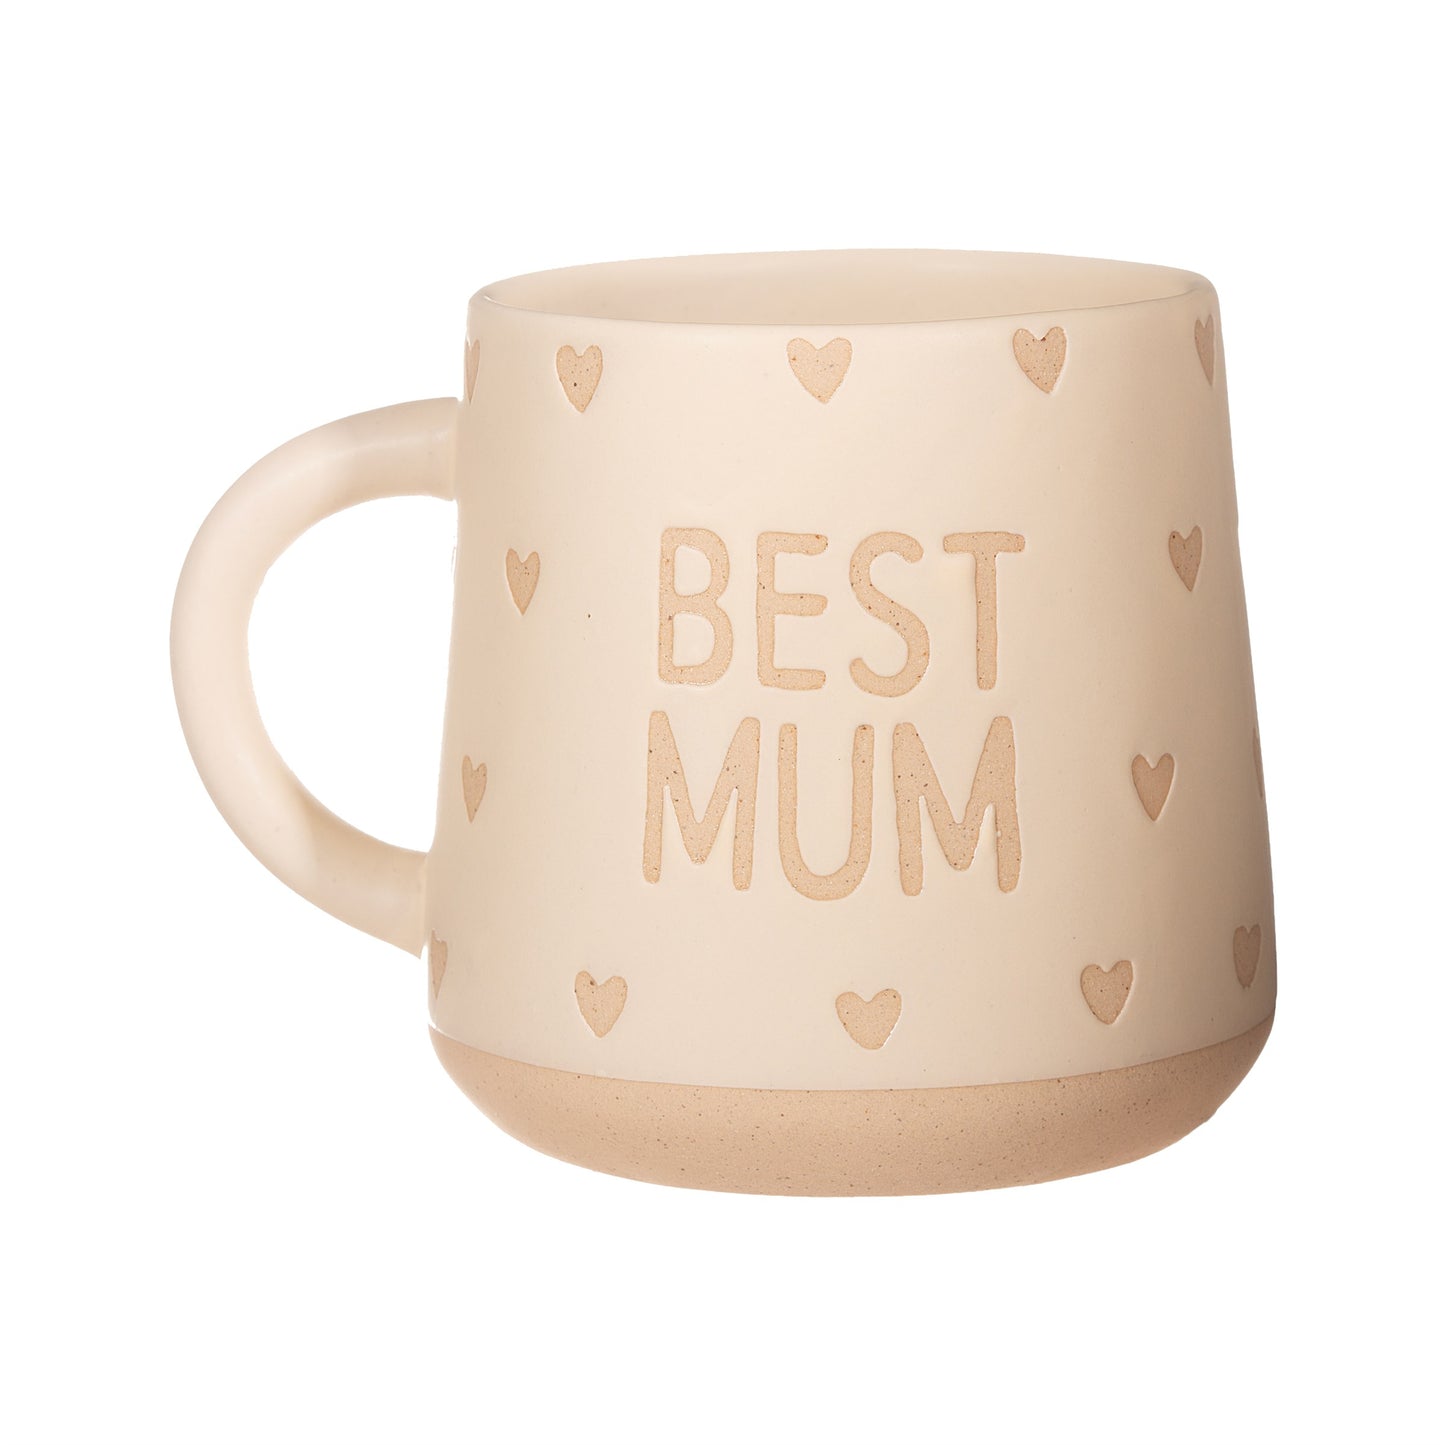 Best Mum Rustic Mug